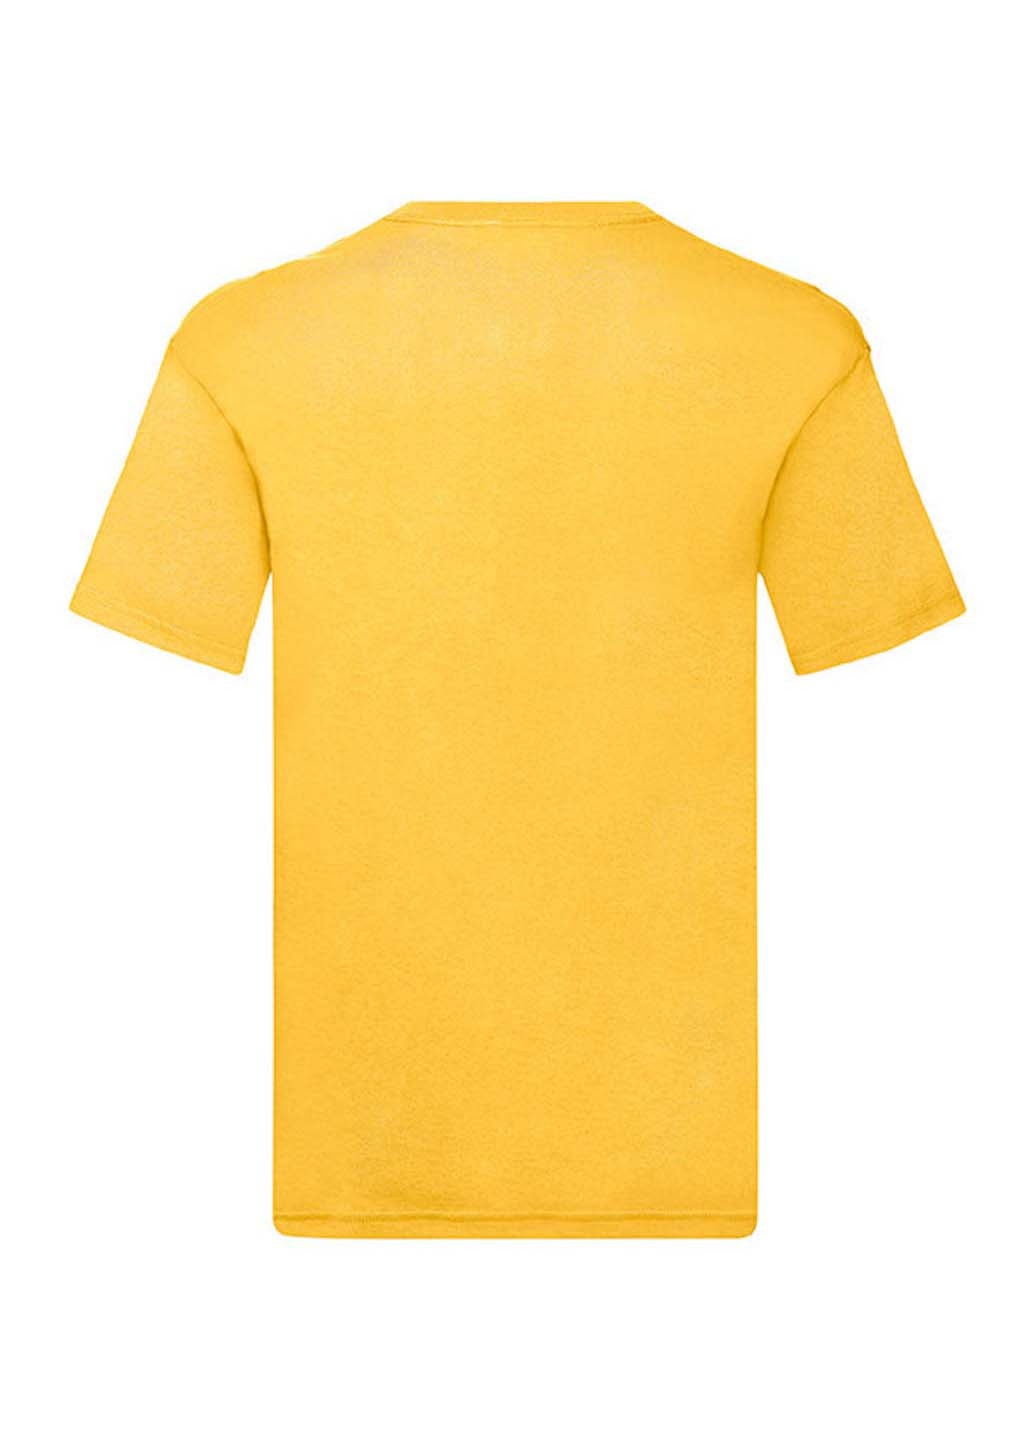 Желтая футболка Fruit of the Loom Original